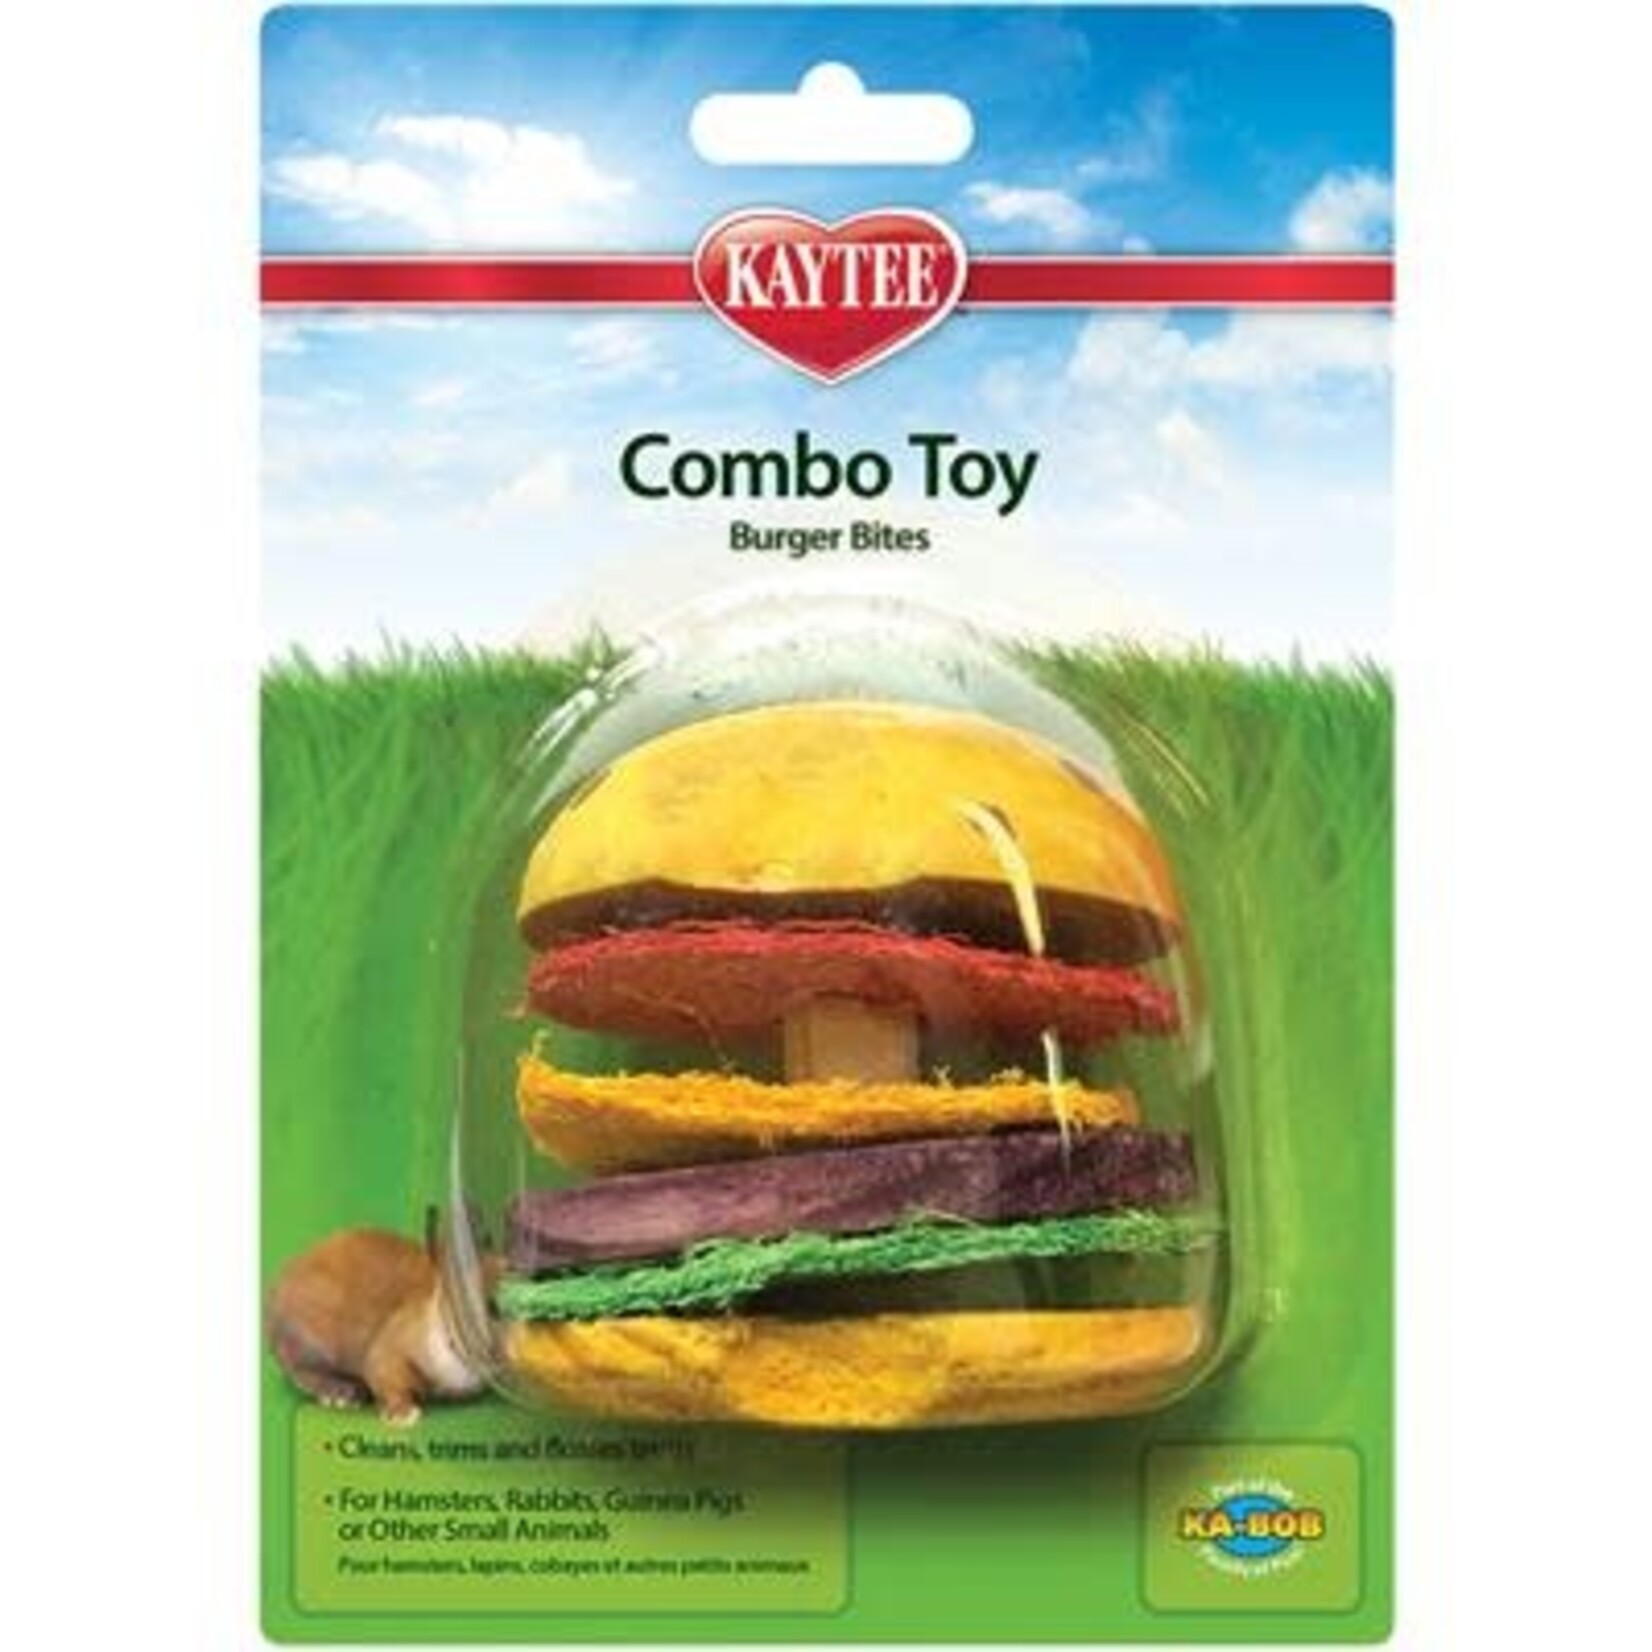 KAYTEE PRODUCTS INC Combo Toy Hamburger